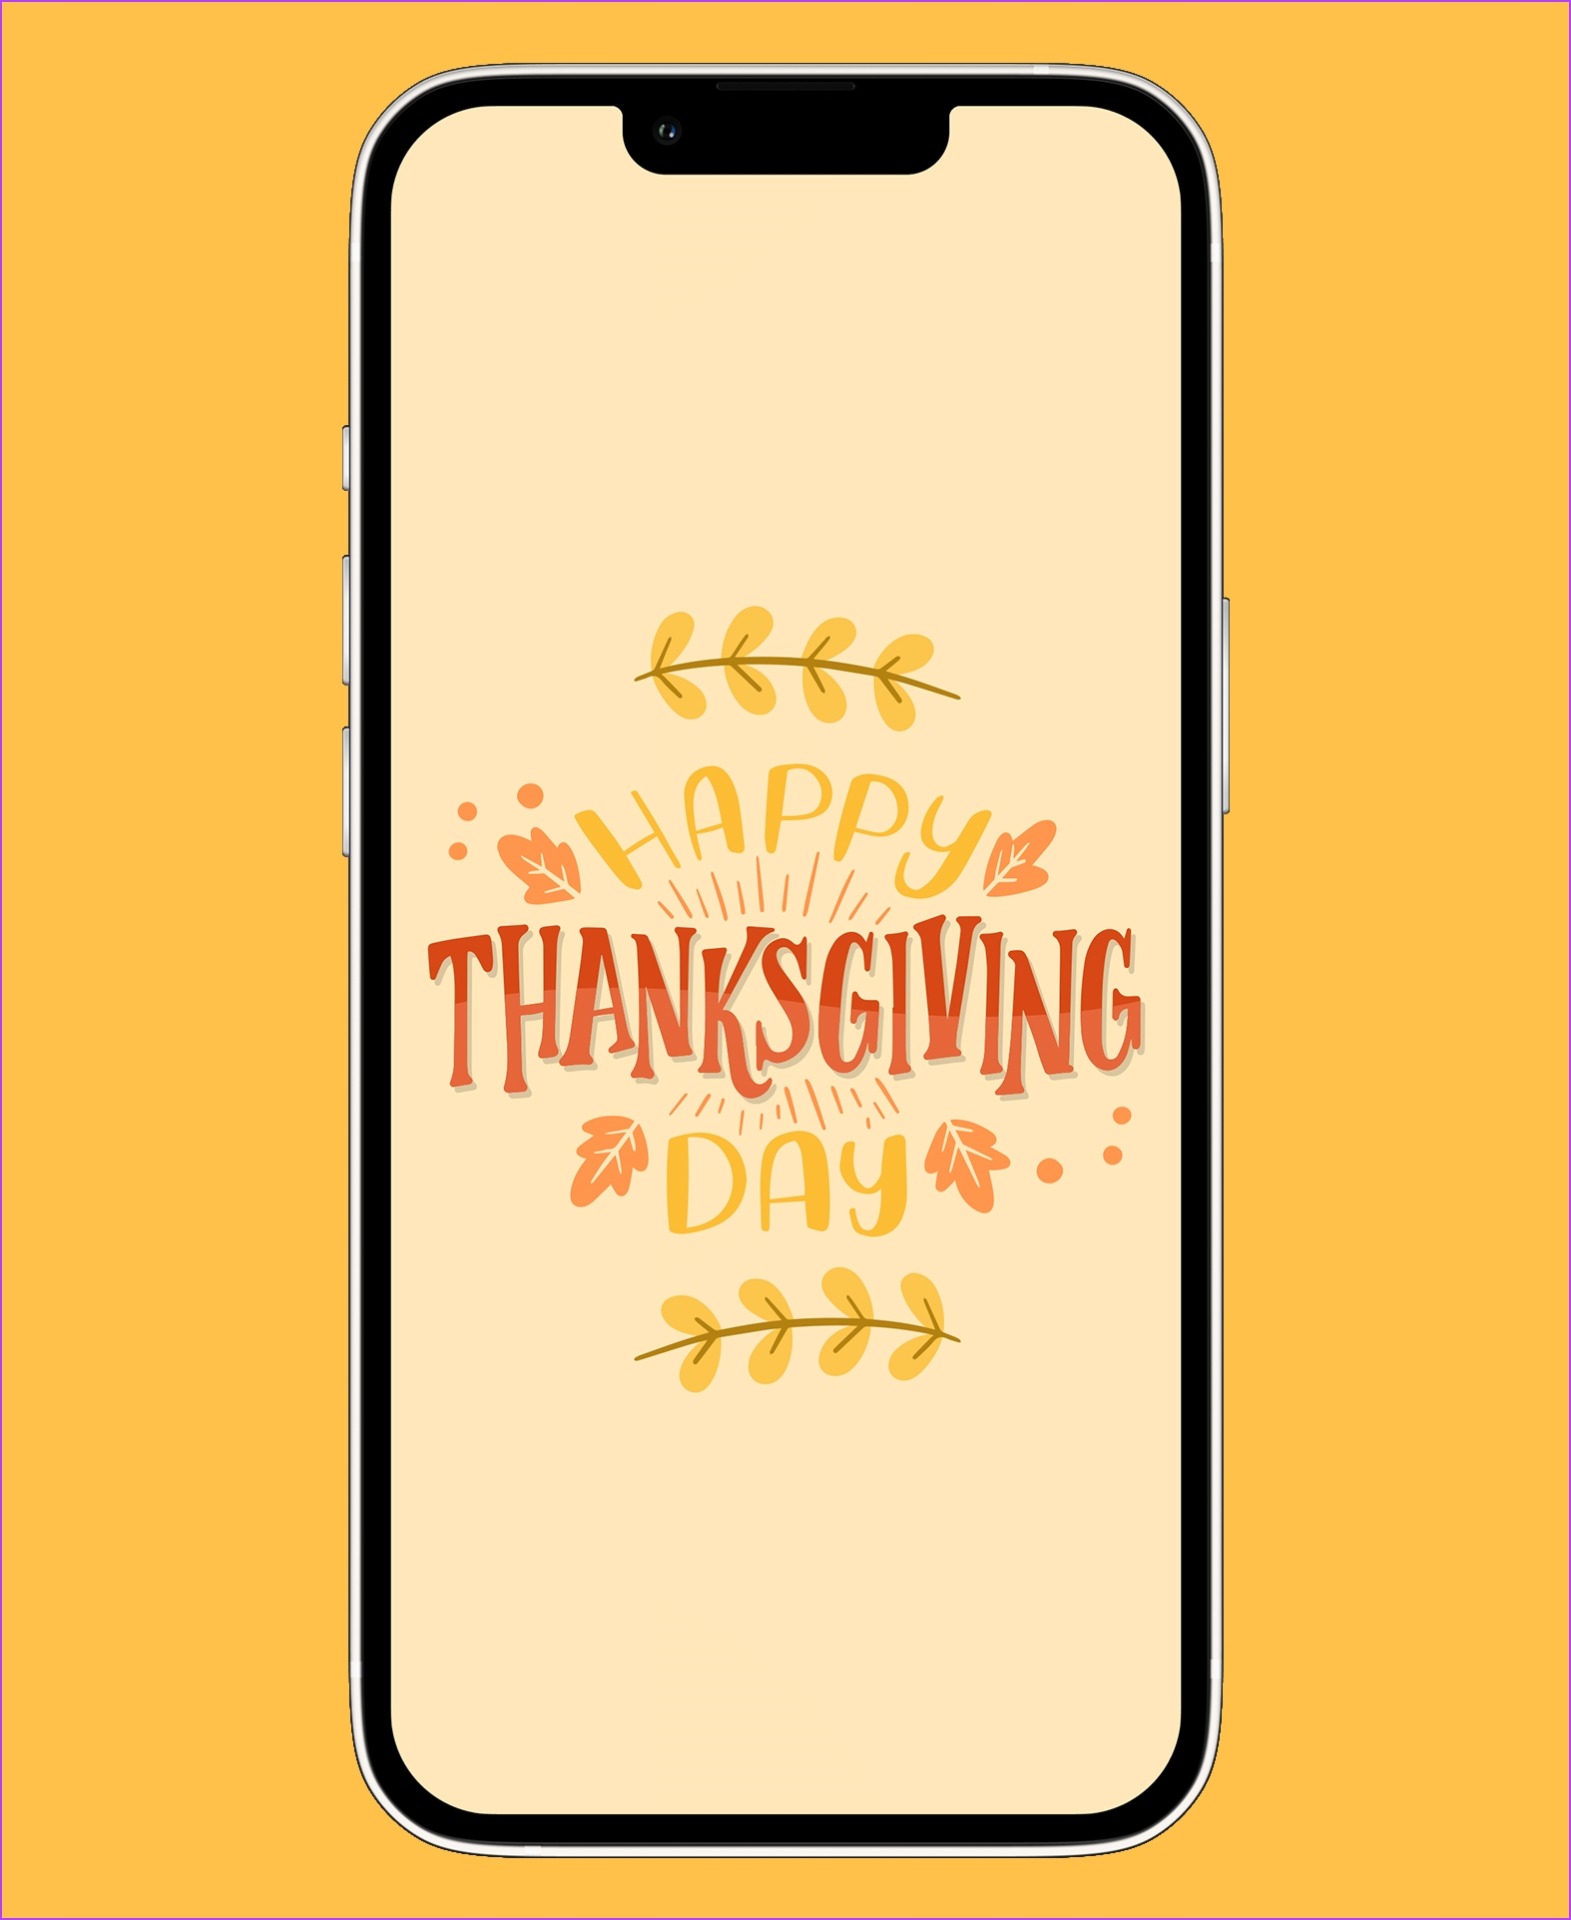 Thanksgiving Treats iPhone Wallpaper  The 45 Best Thanksgiving iPhone  Wallpaper Ideas Thatll Make You Feel Festive  POPSUGAR Tech Photo 21